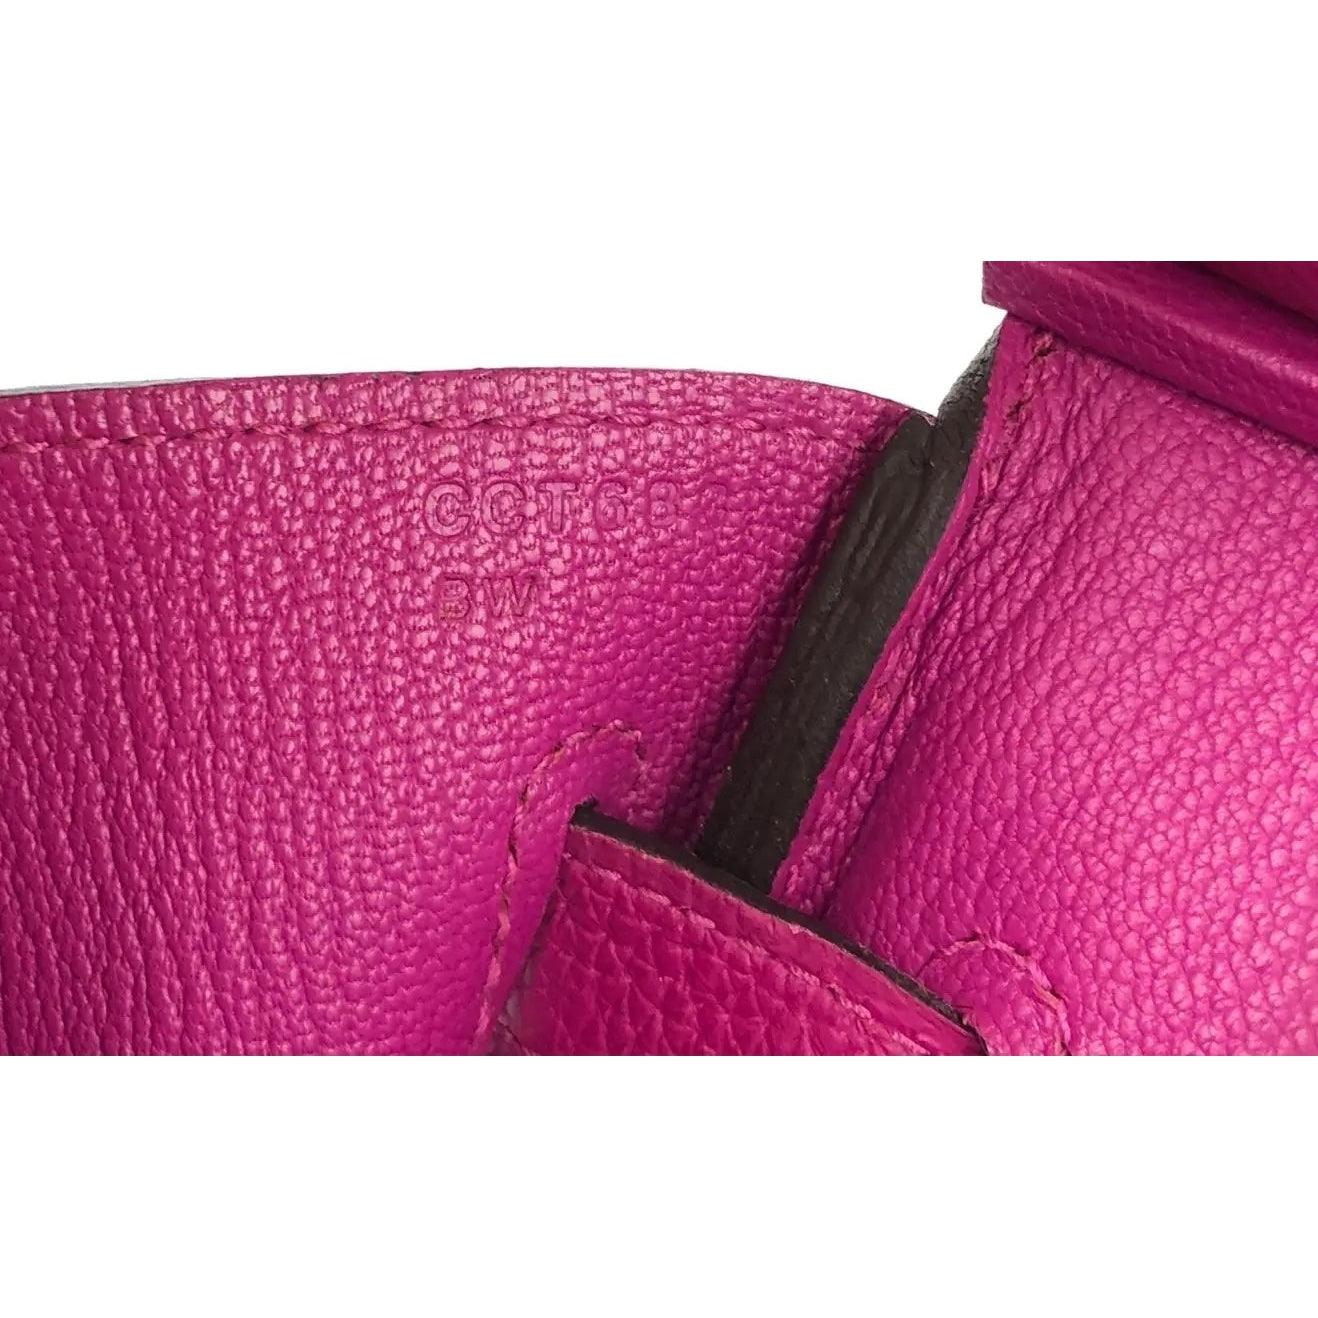 Hermes Birkin Womens Handbags 2019 Ss, Pink, Birkin 30